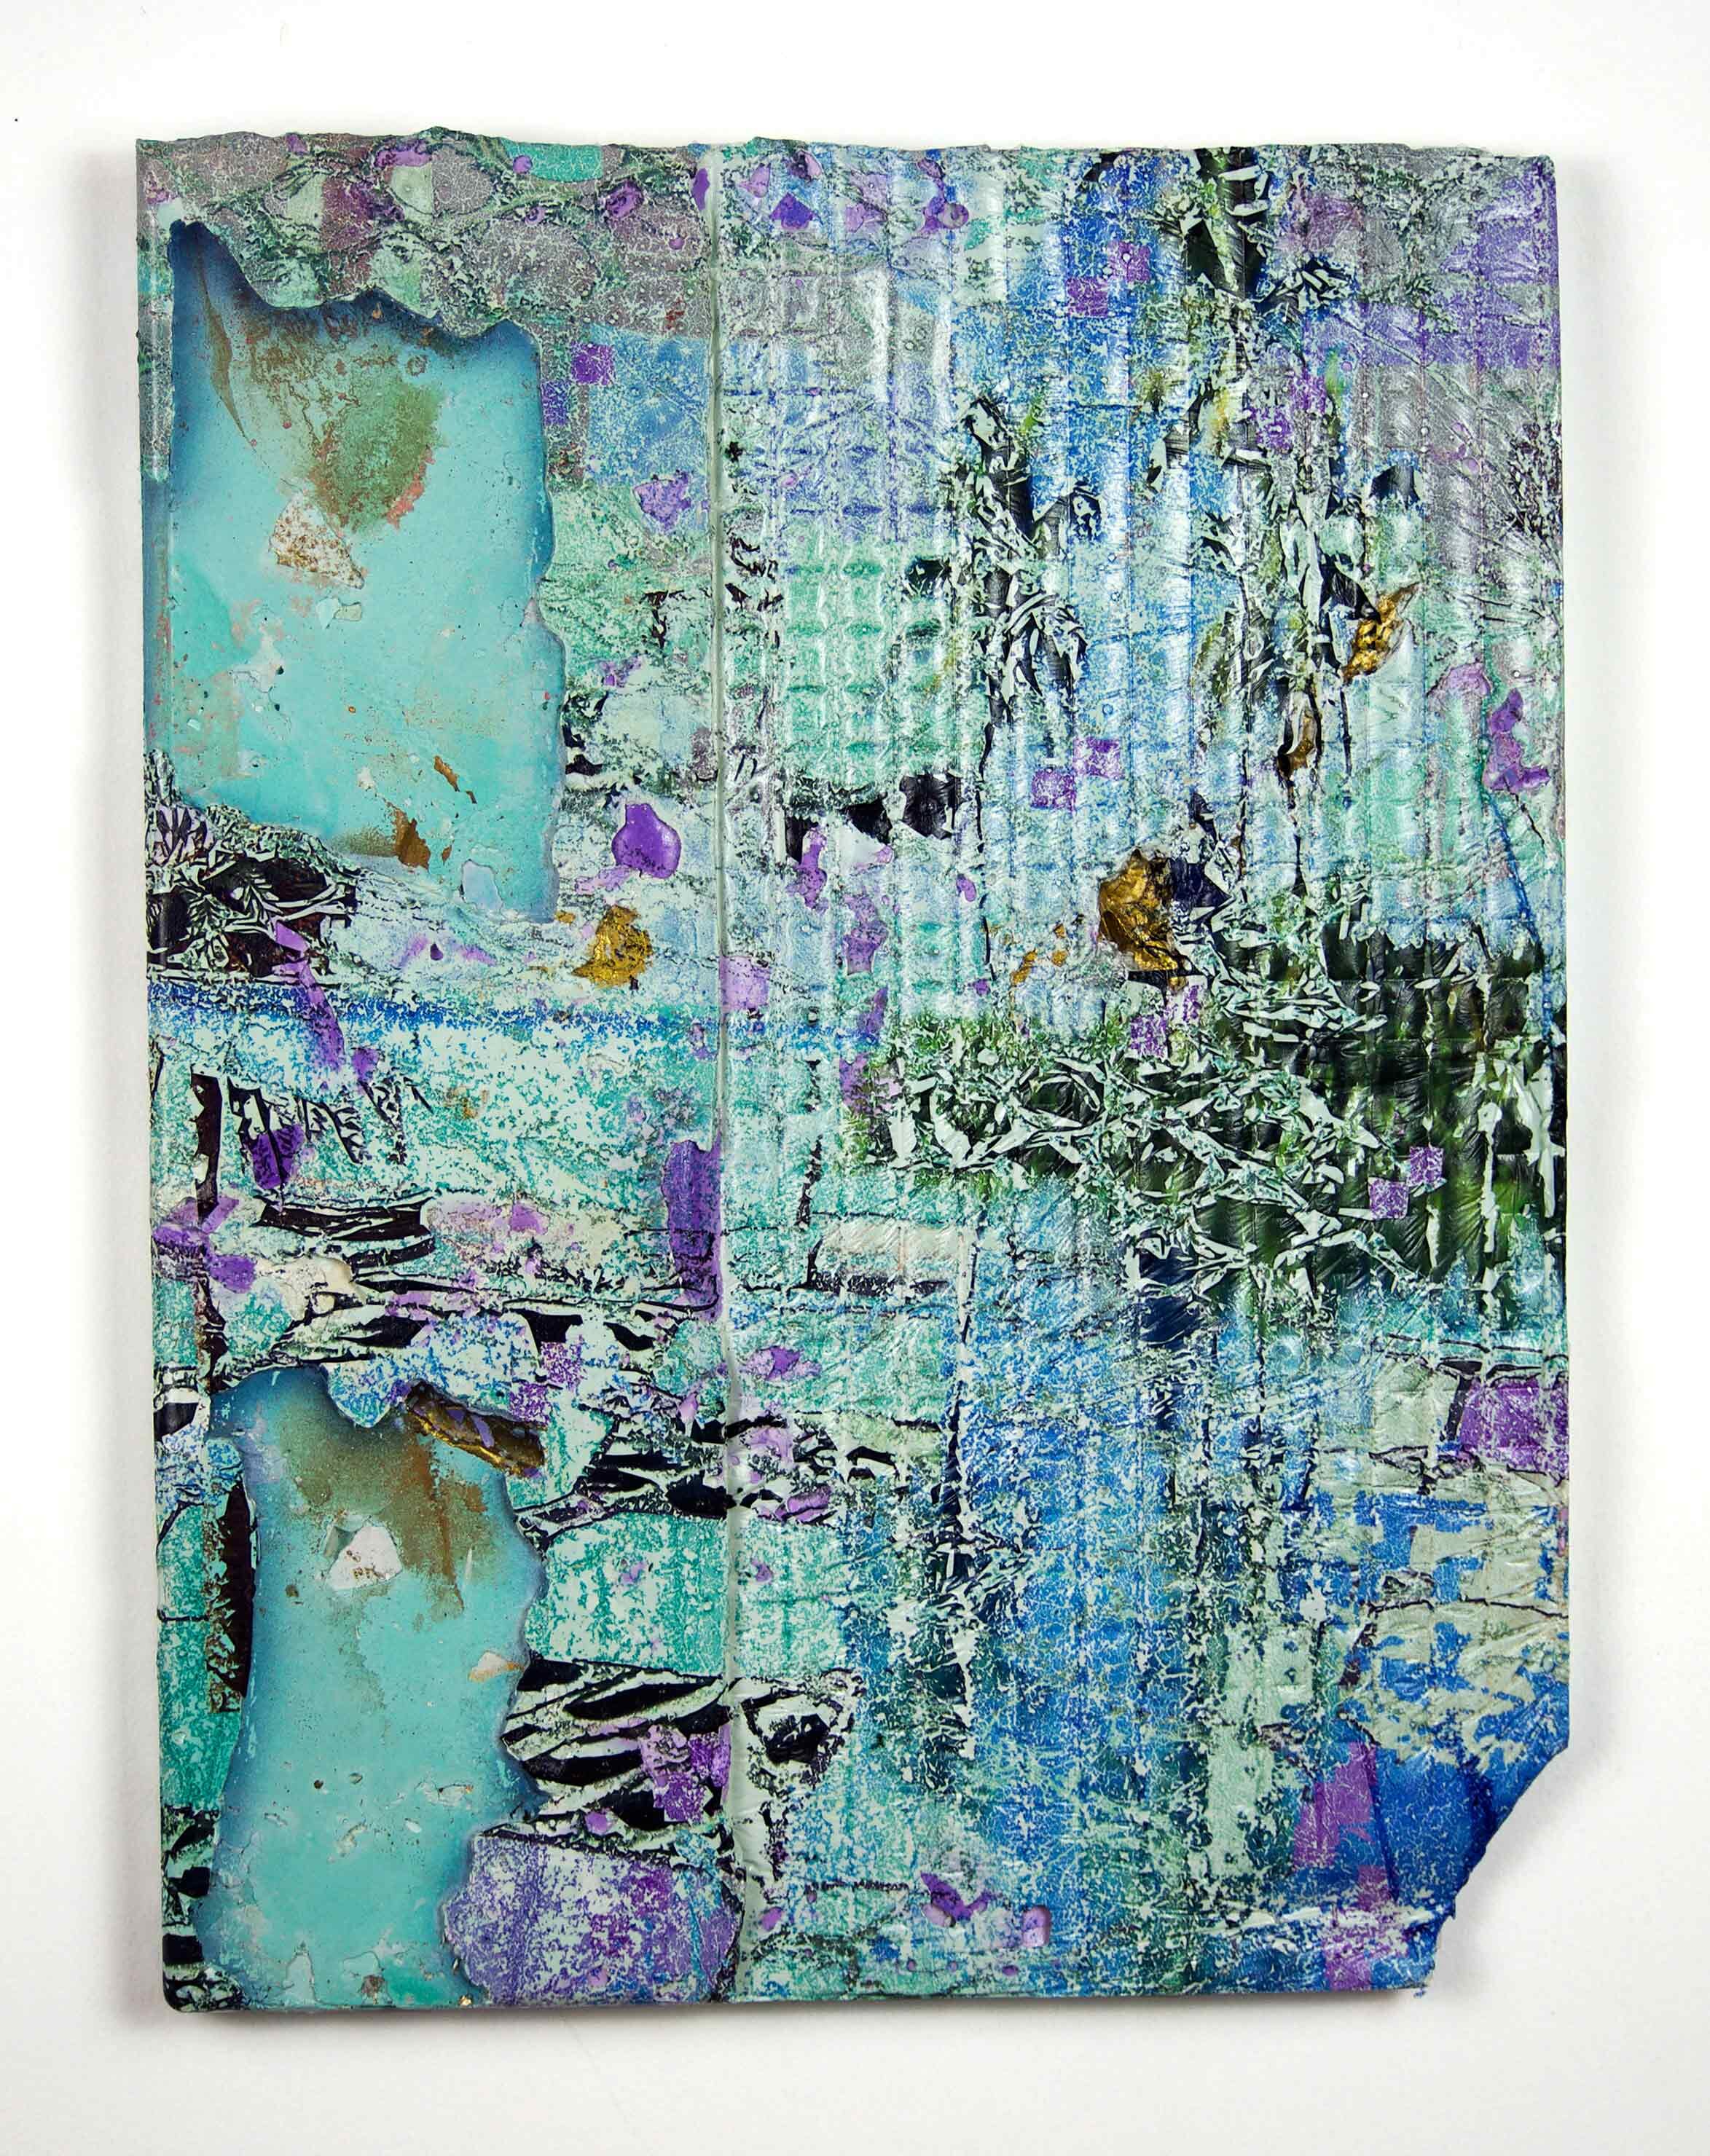   Islands in the Stream   Plaster, mesh, acrylic, water transfer print  40cm x 30cm 